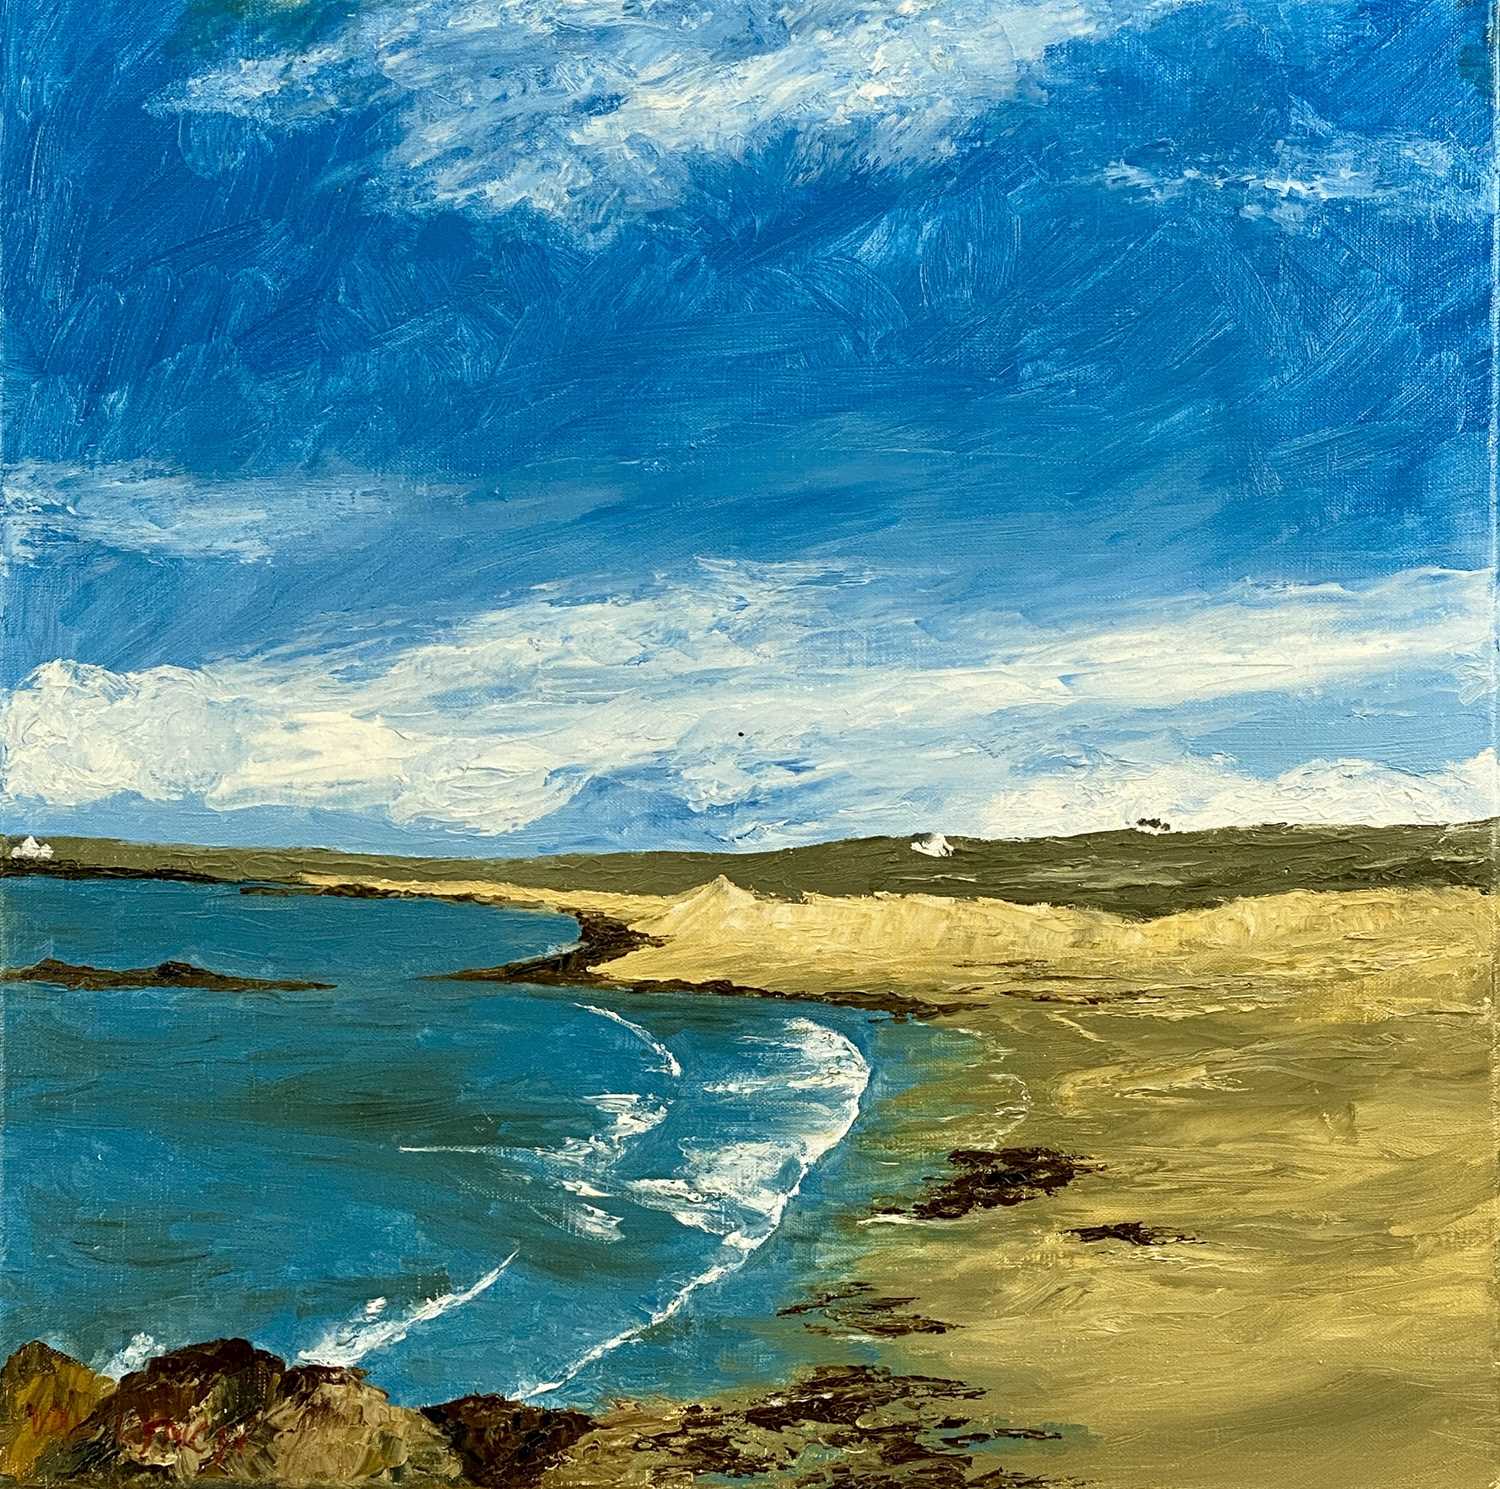 VAL LYNCH (Contemporary British) oil on canvas - entitled verso "Traith Llydan Rhosneigr Beach",